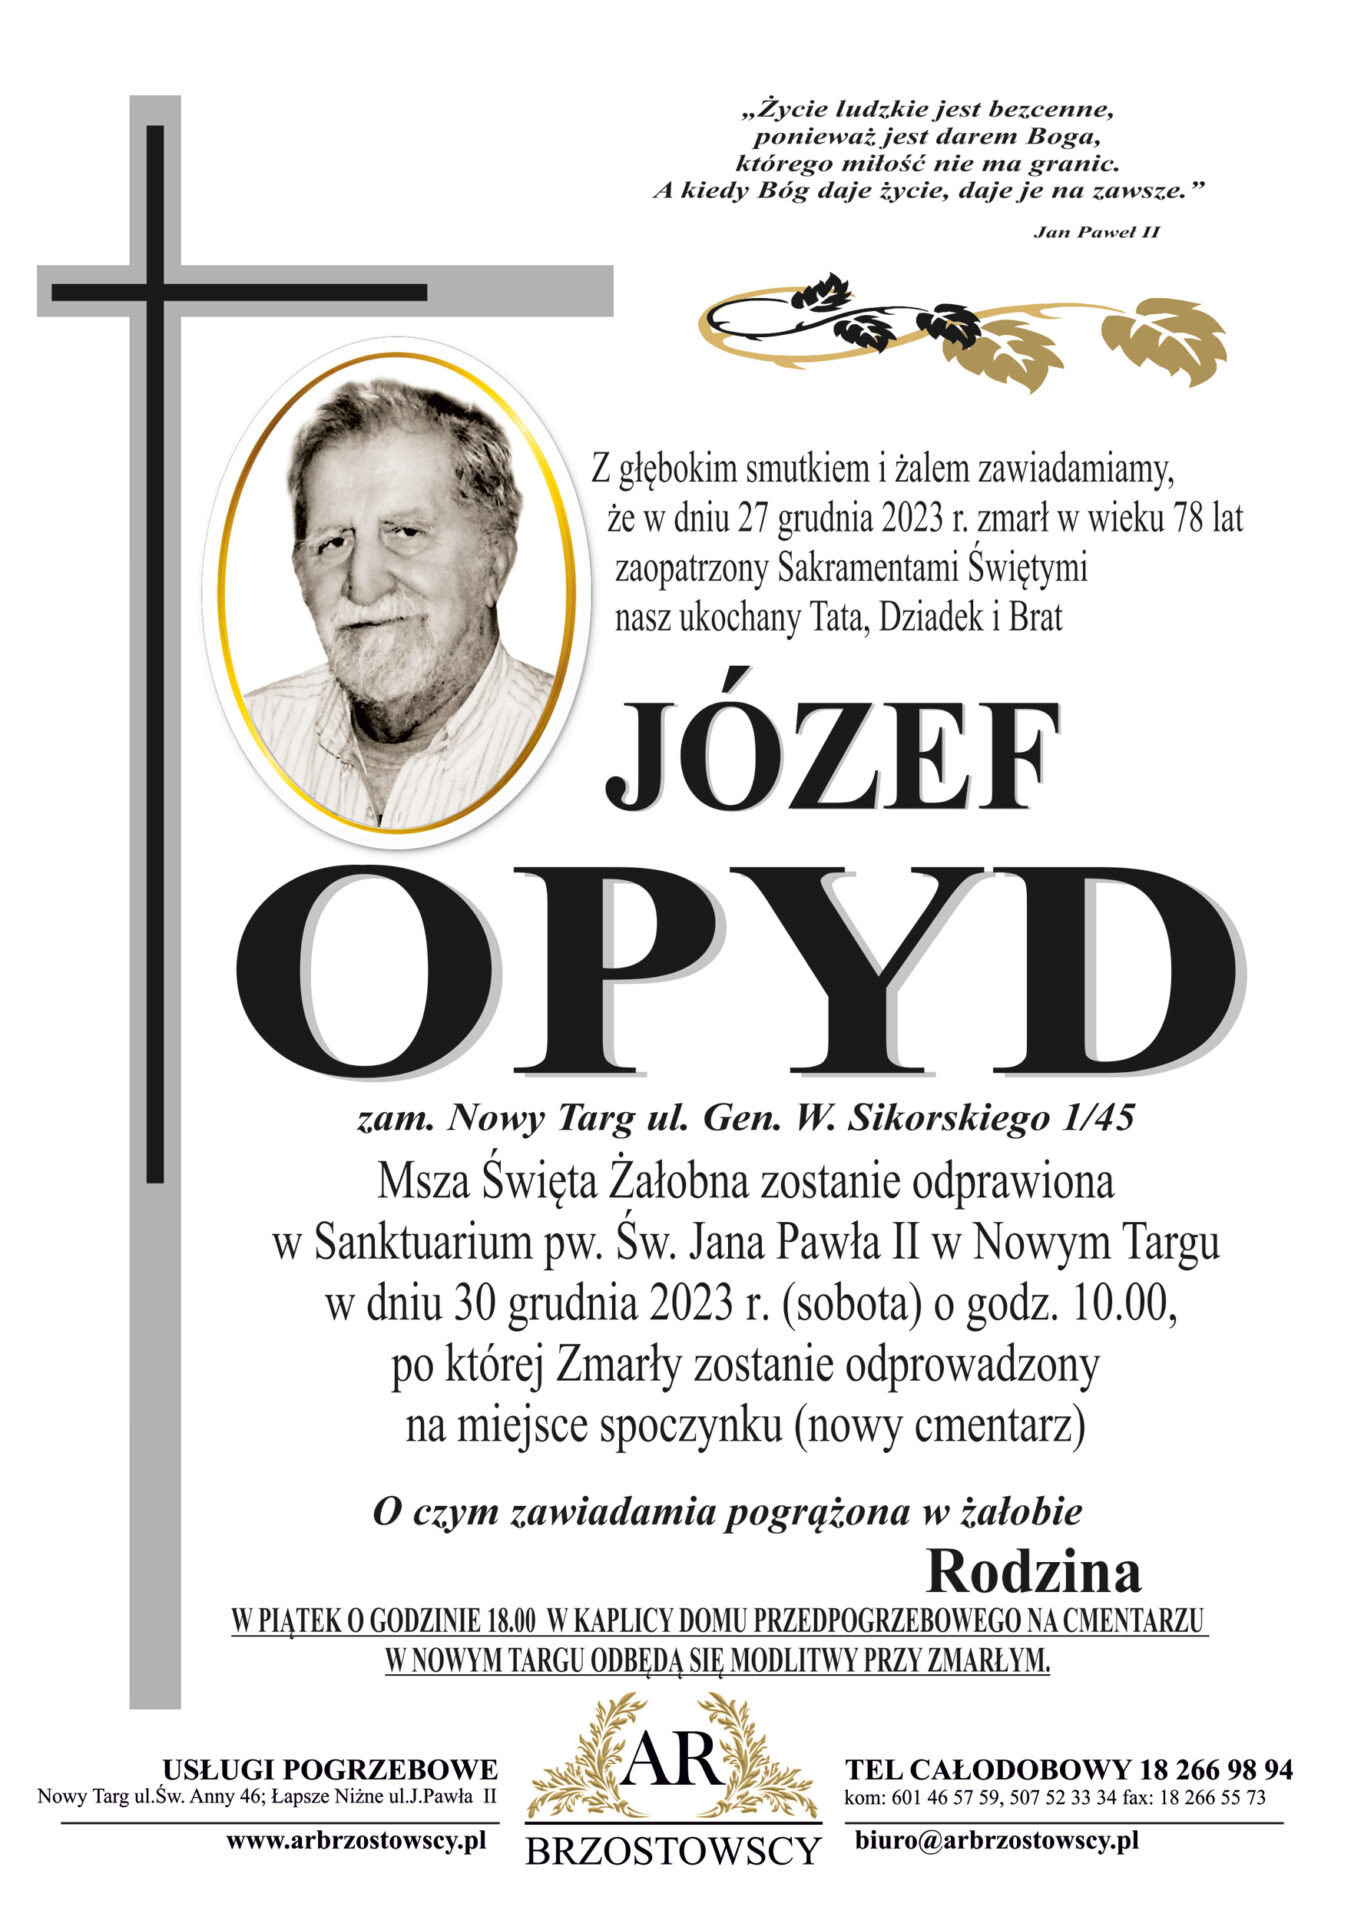 Józef Opyd